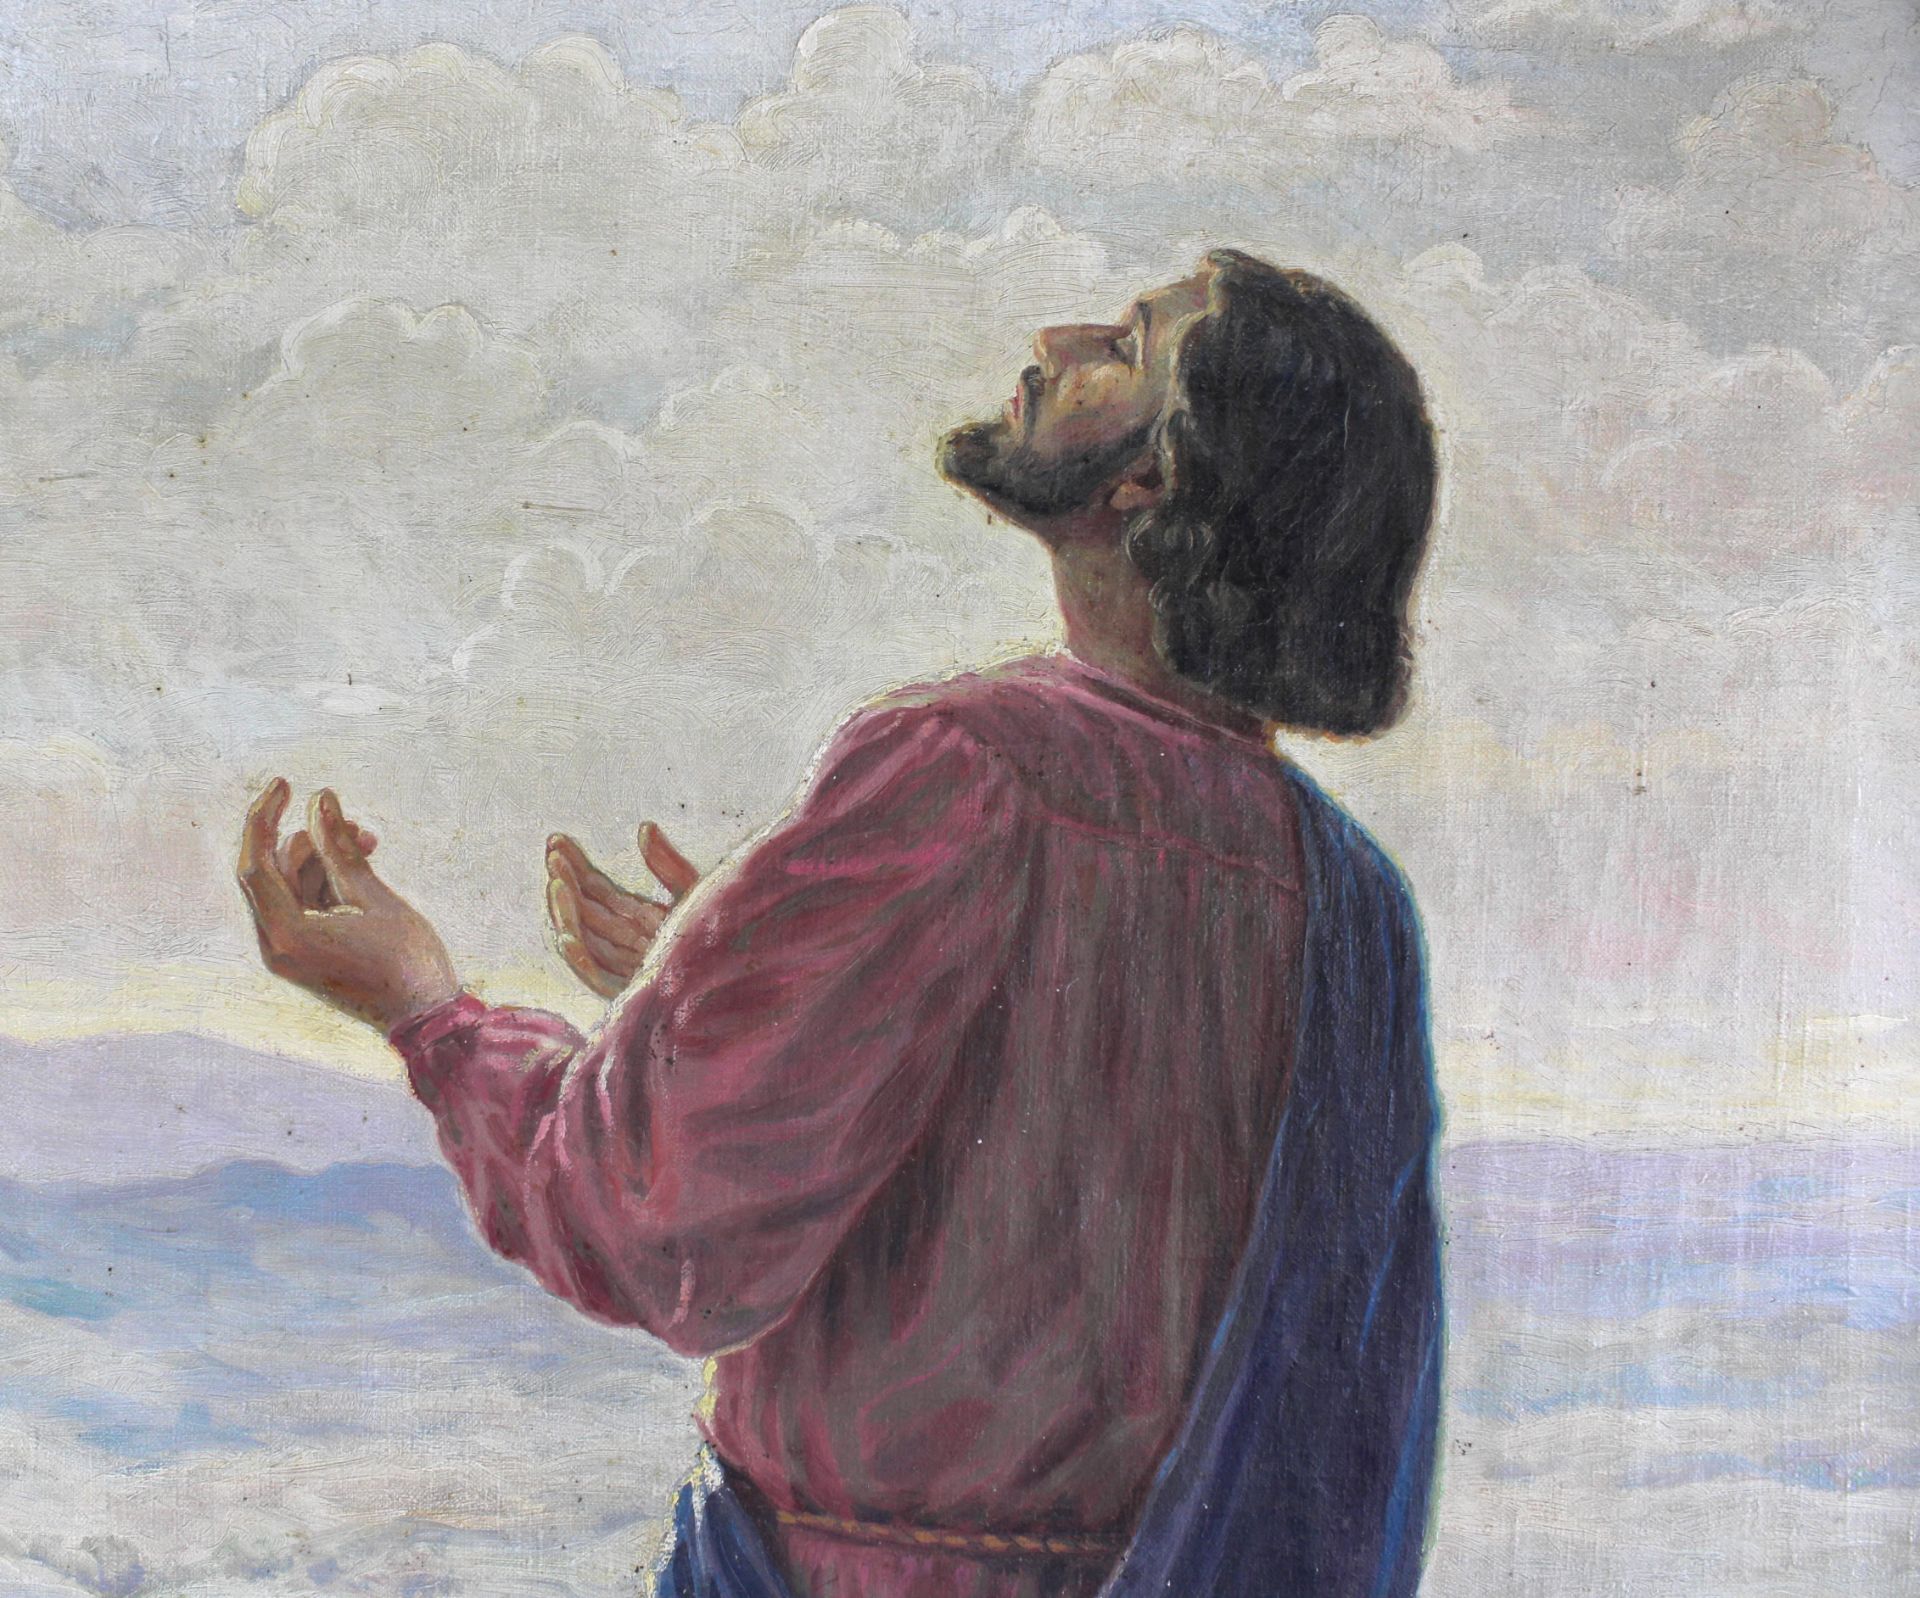 Vladimir Zlamal, Tschechei 20.Jh. "Jesus auf dem Berg" Öl/Leinwand, sig. u. dat. 1935, 106 x 80 cm - Image 4 of 5